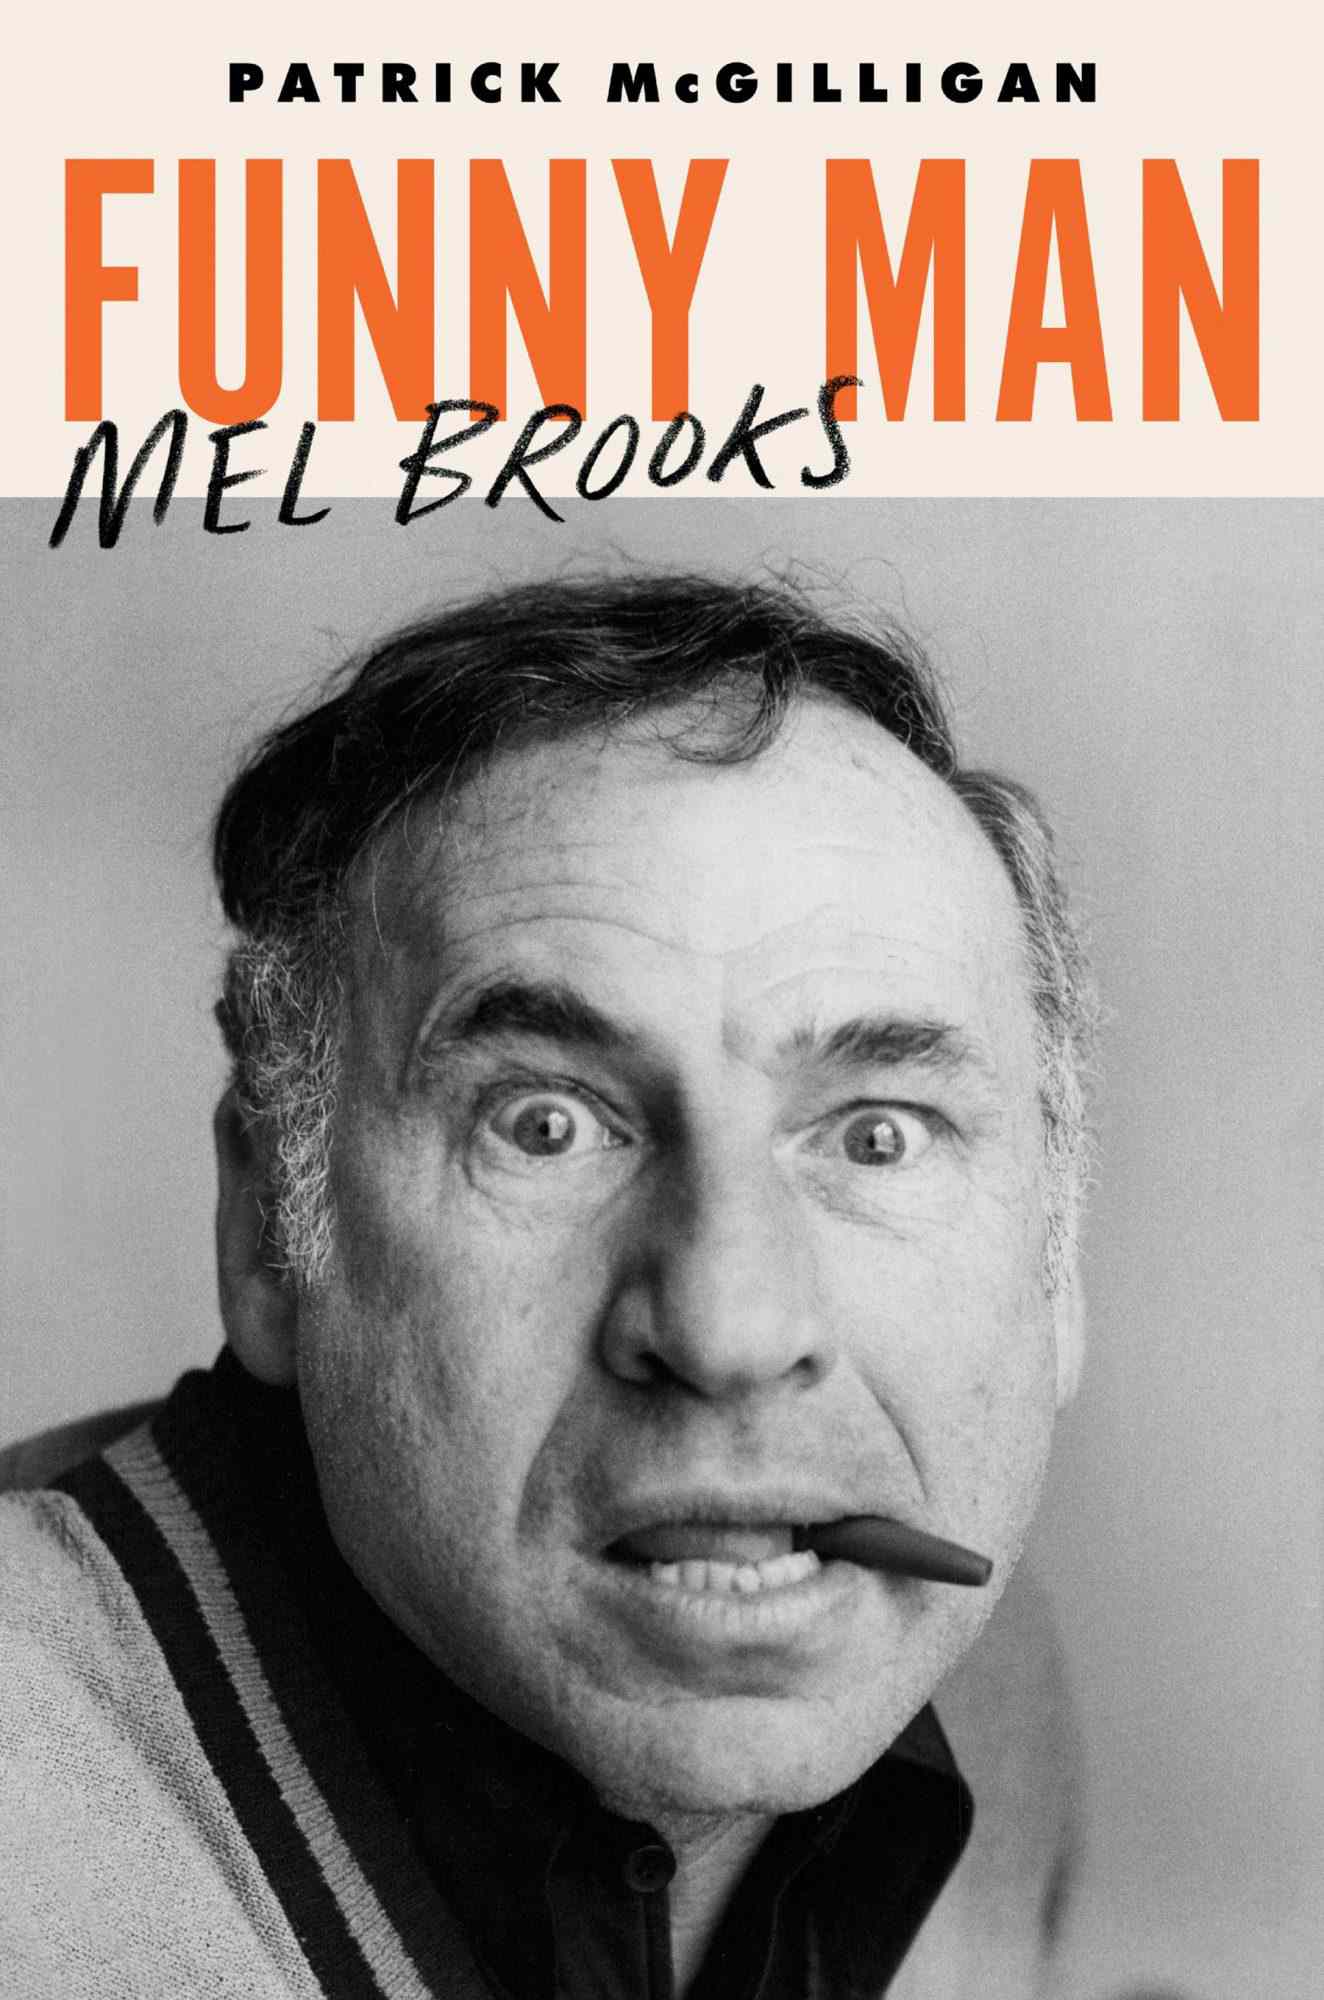 Funny Man: Mel Brooks, by Patrick McGilligan